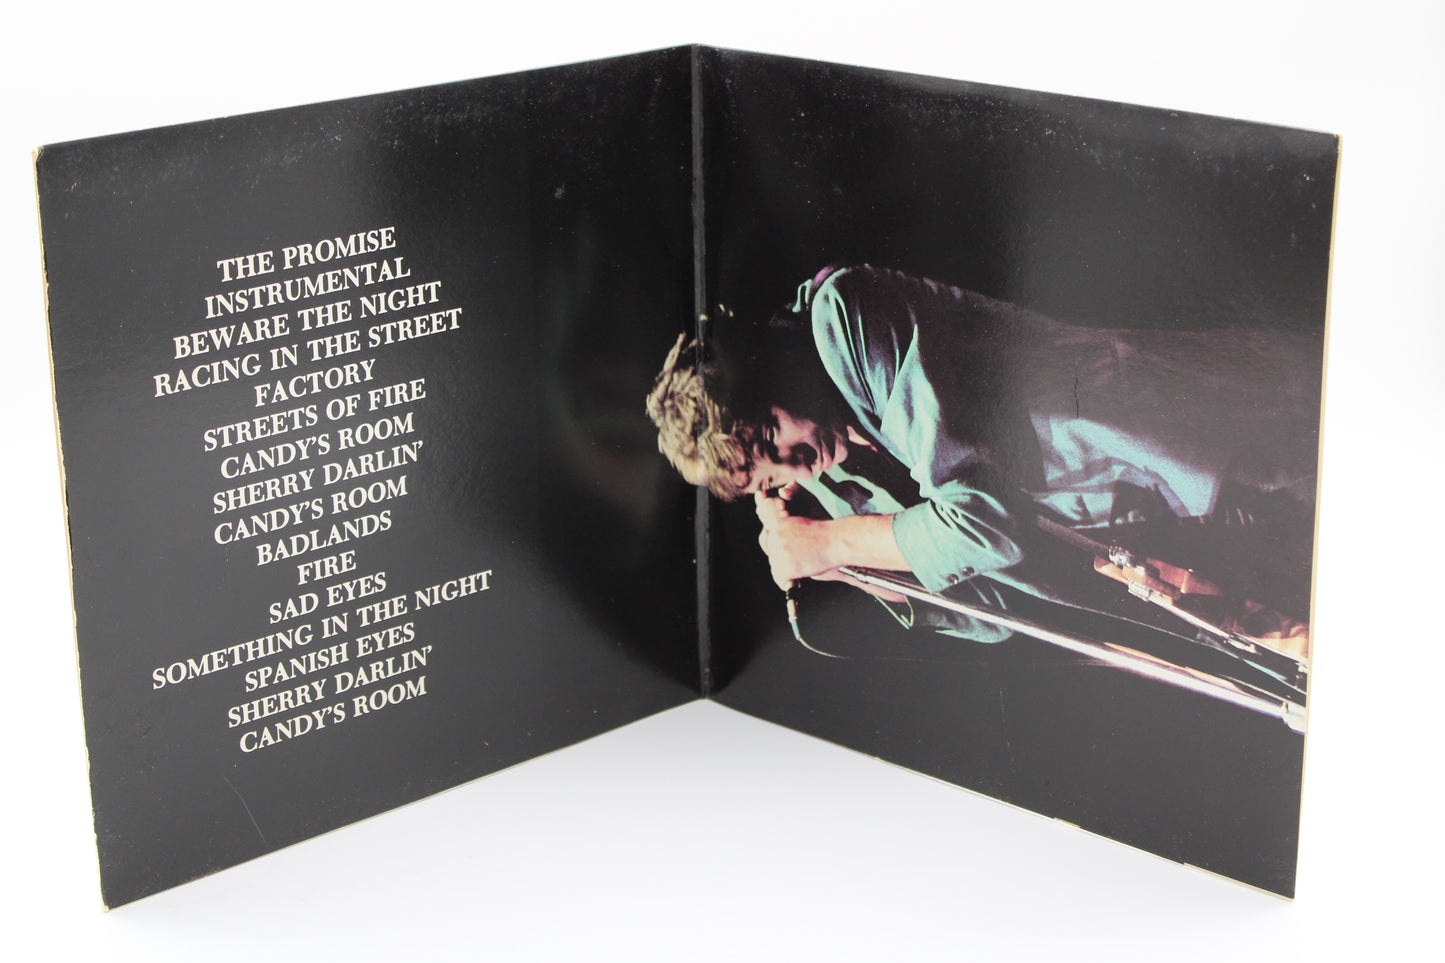 Bruce Springsteen - Still On The Edge - Vinyl 2LPs - UK Press BLV - Outtakes & Demos